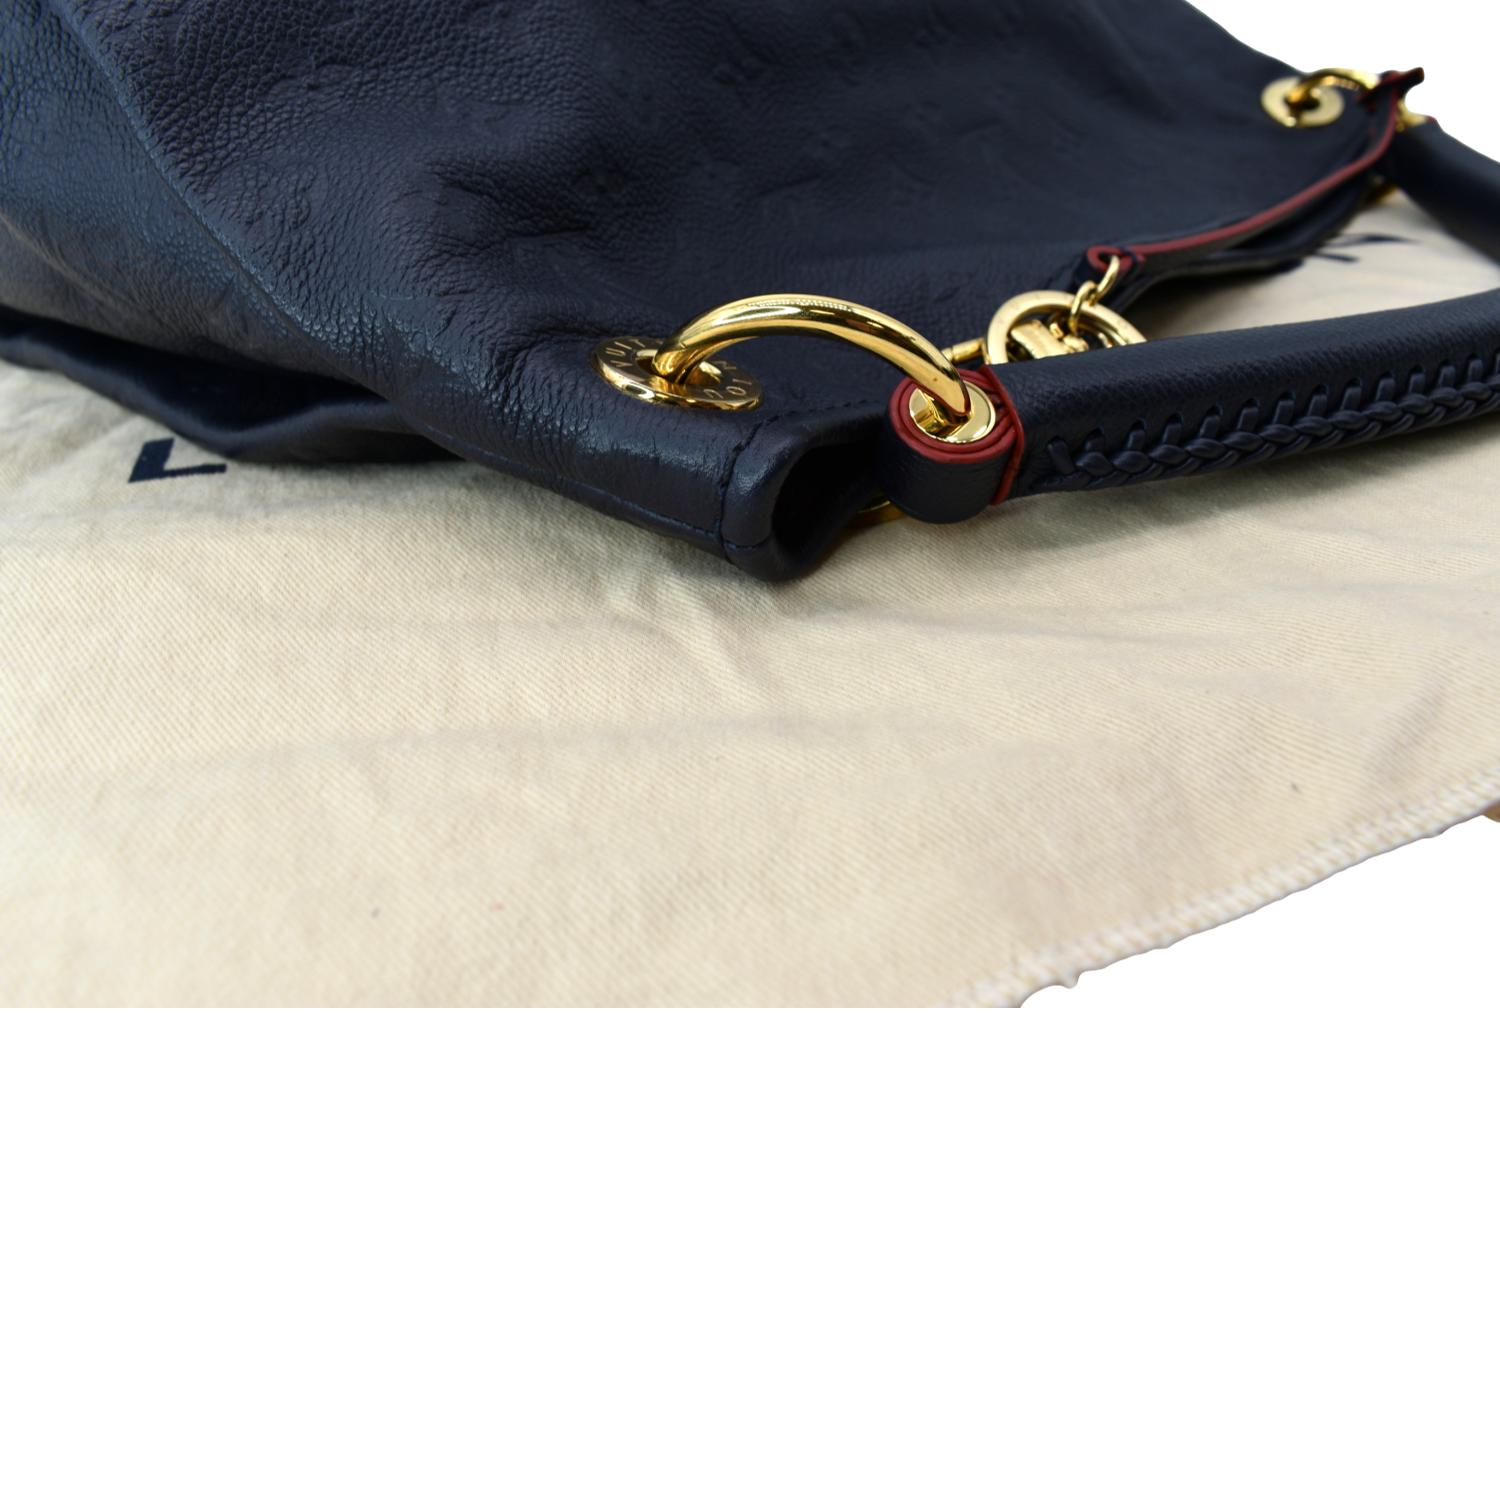 LOUIS VUITTON Artsy MM Empreinte Leather Shoulder Bag Navy Blue